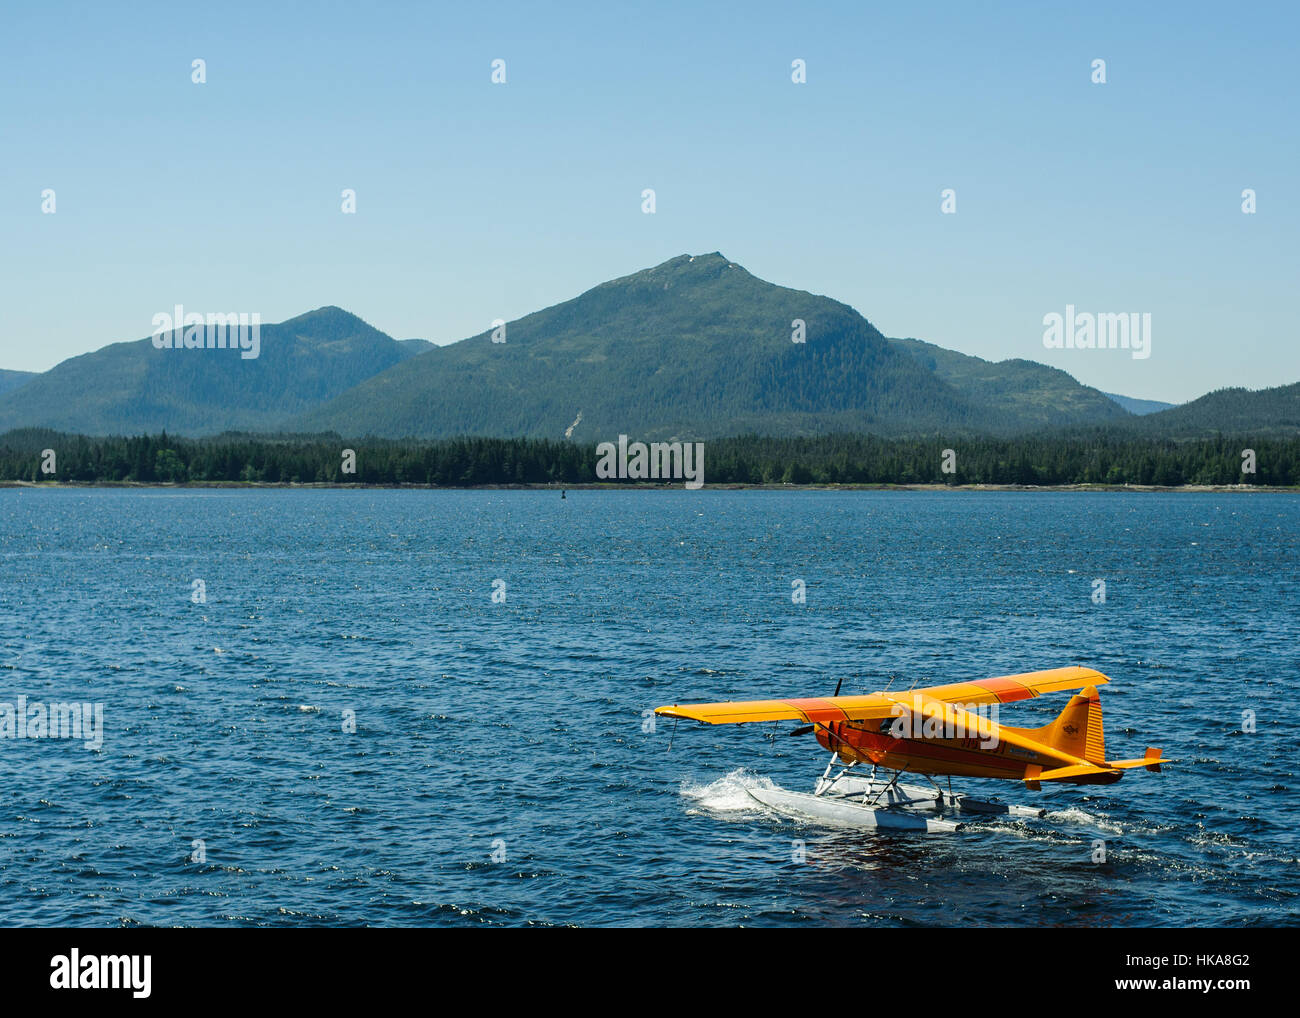 Water plane in Alaska Stock Photo